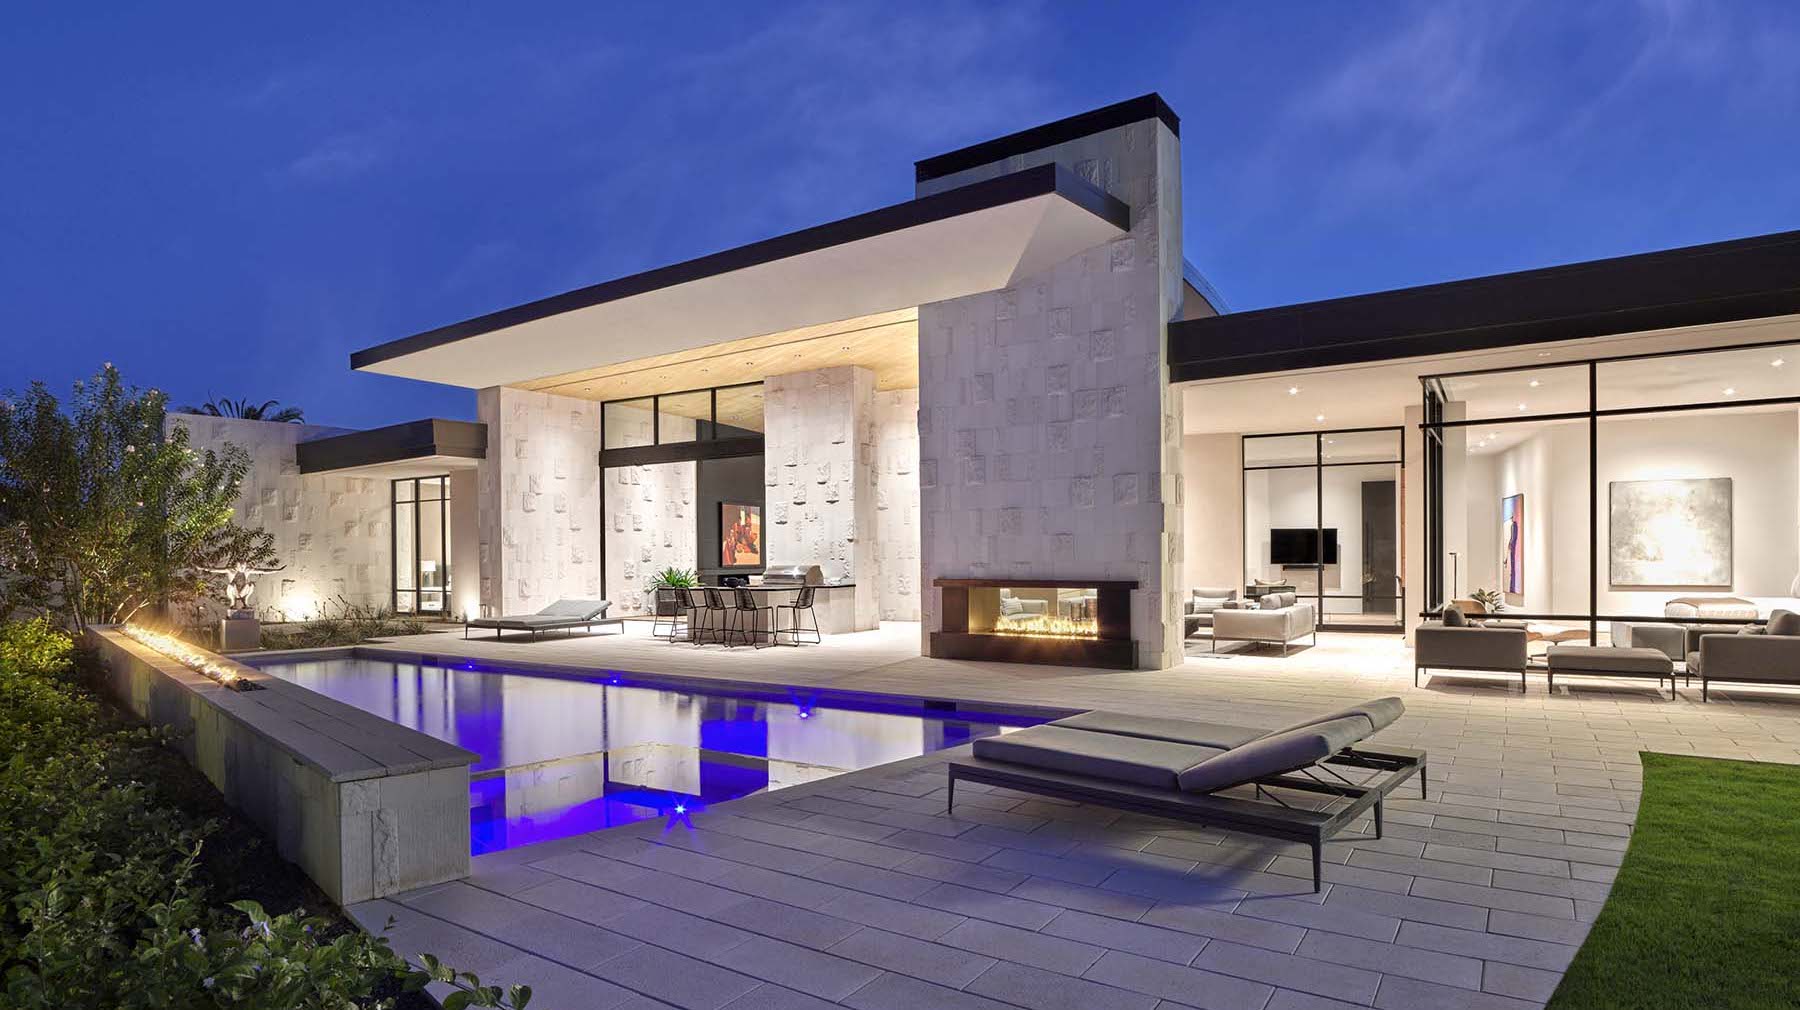 Stone Radius Modern Luxury pool/patio at dusk